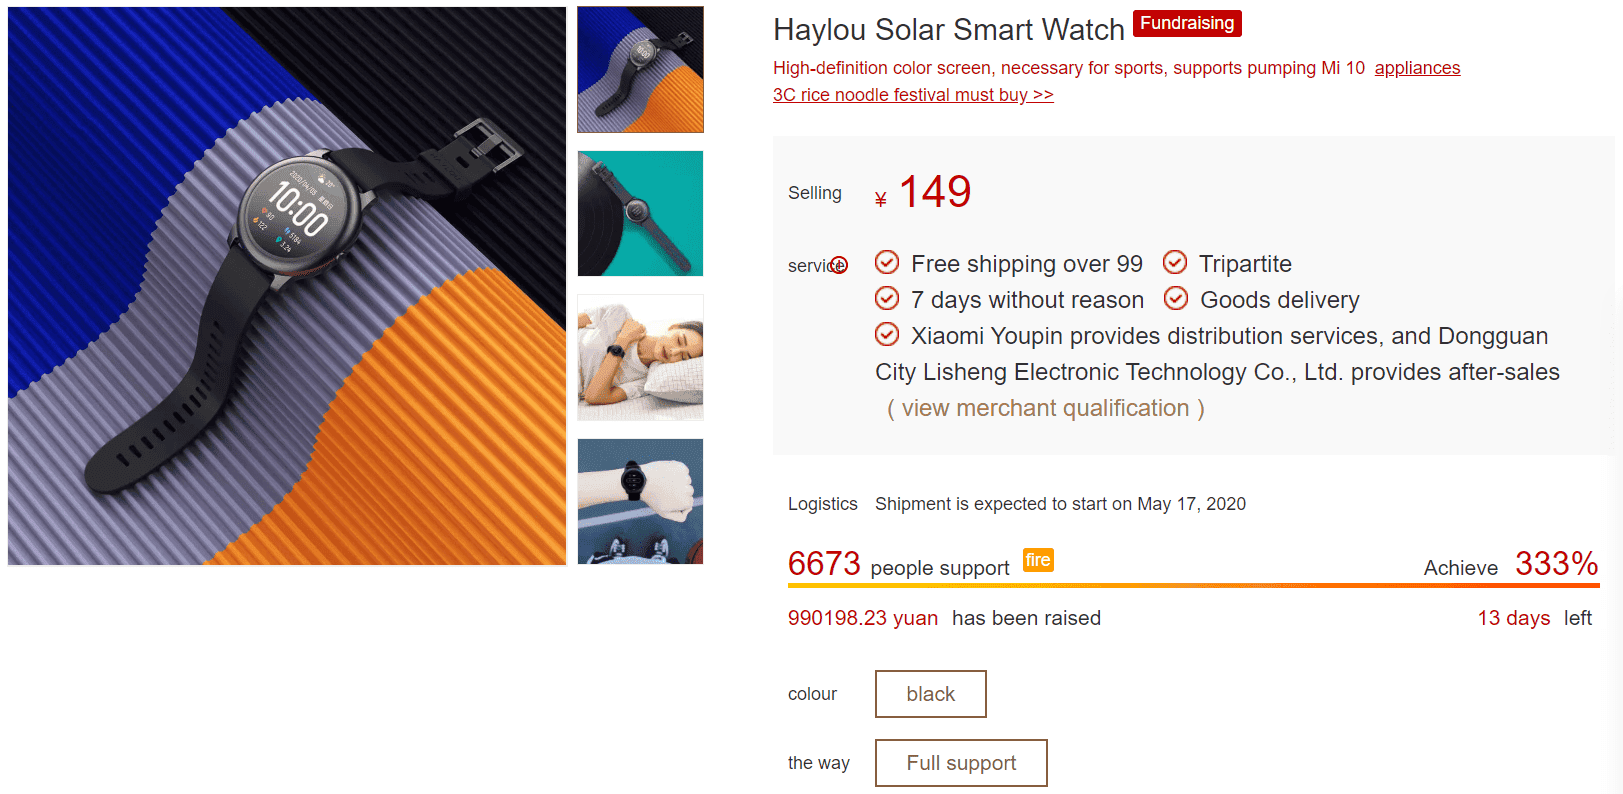 Haylou Solar smartwatch